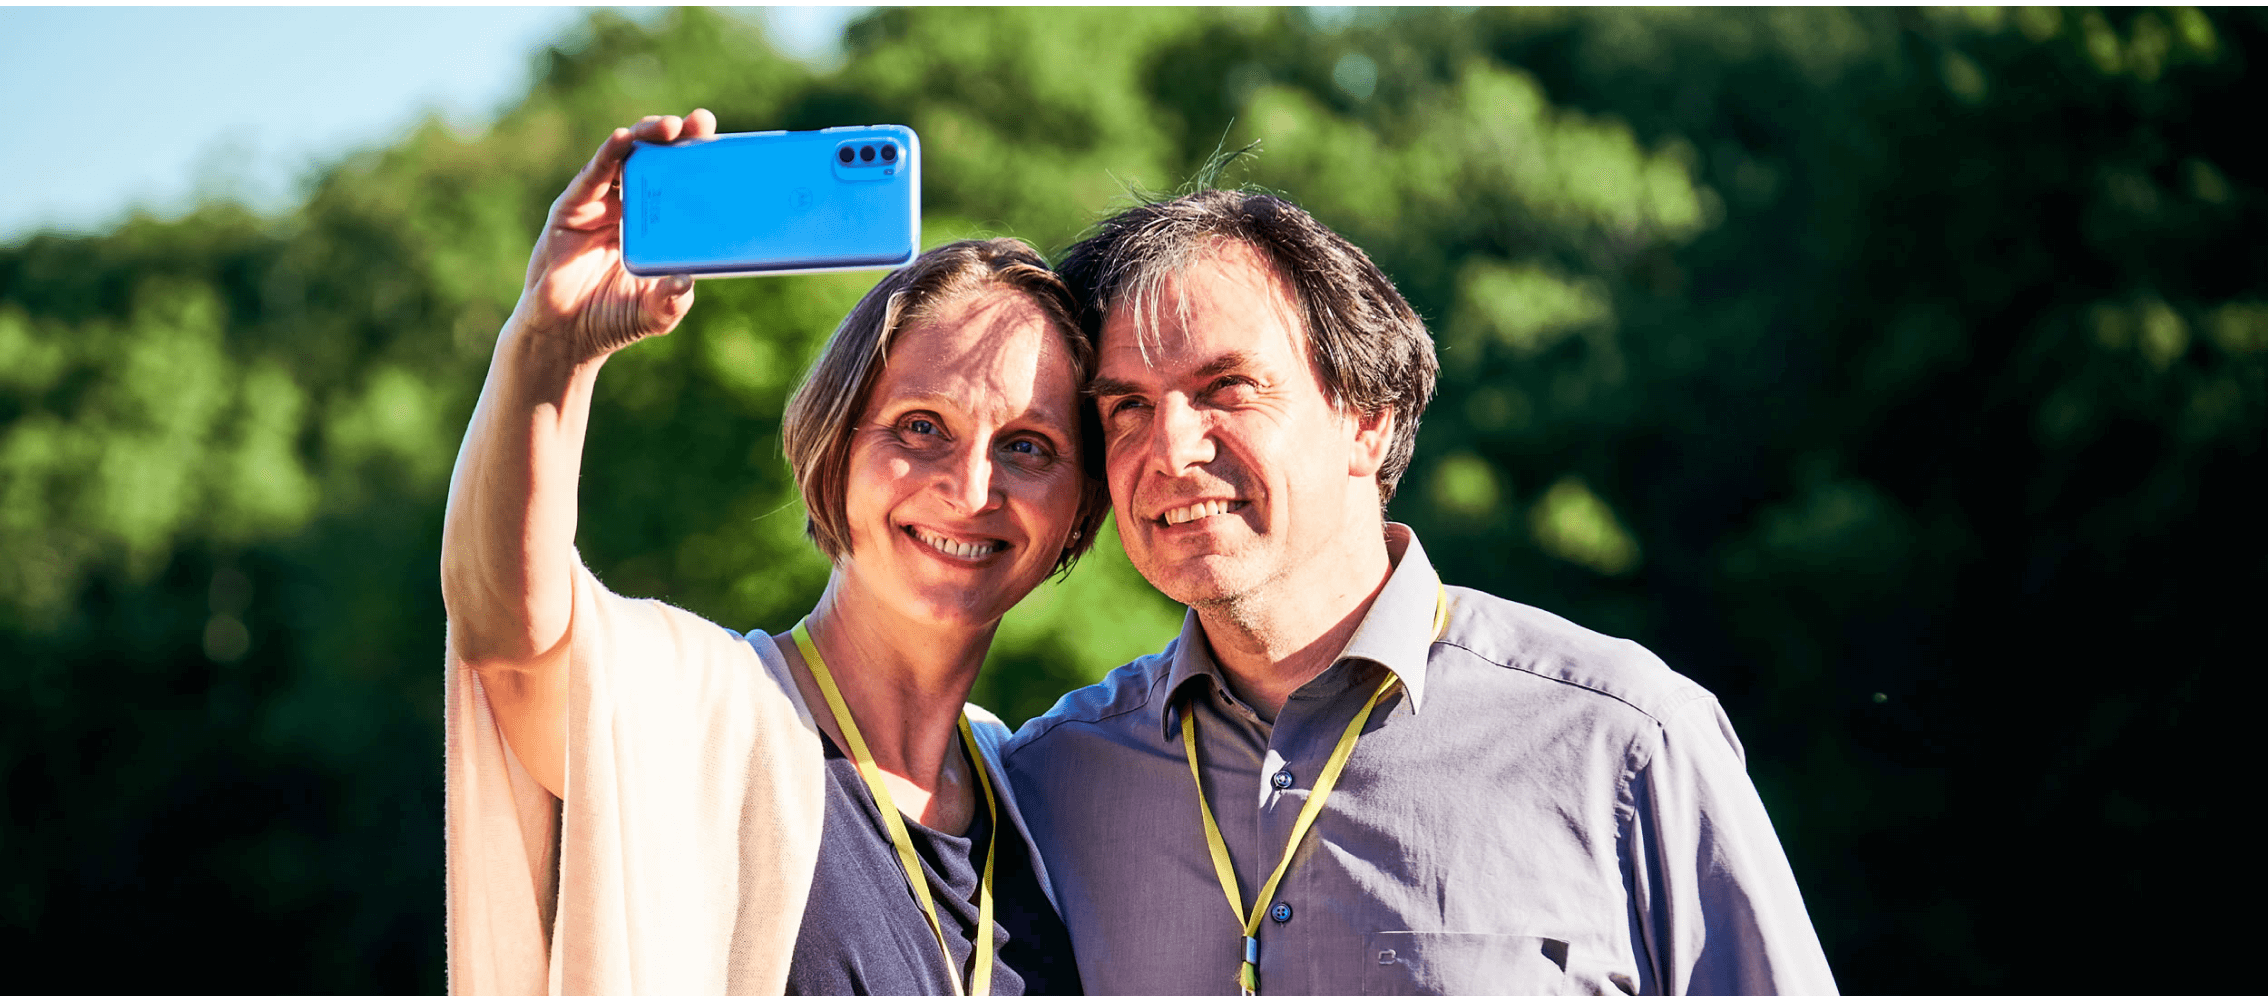 Man and women taking a selfie